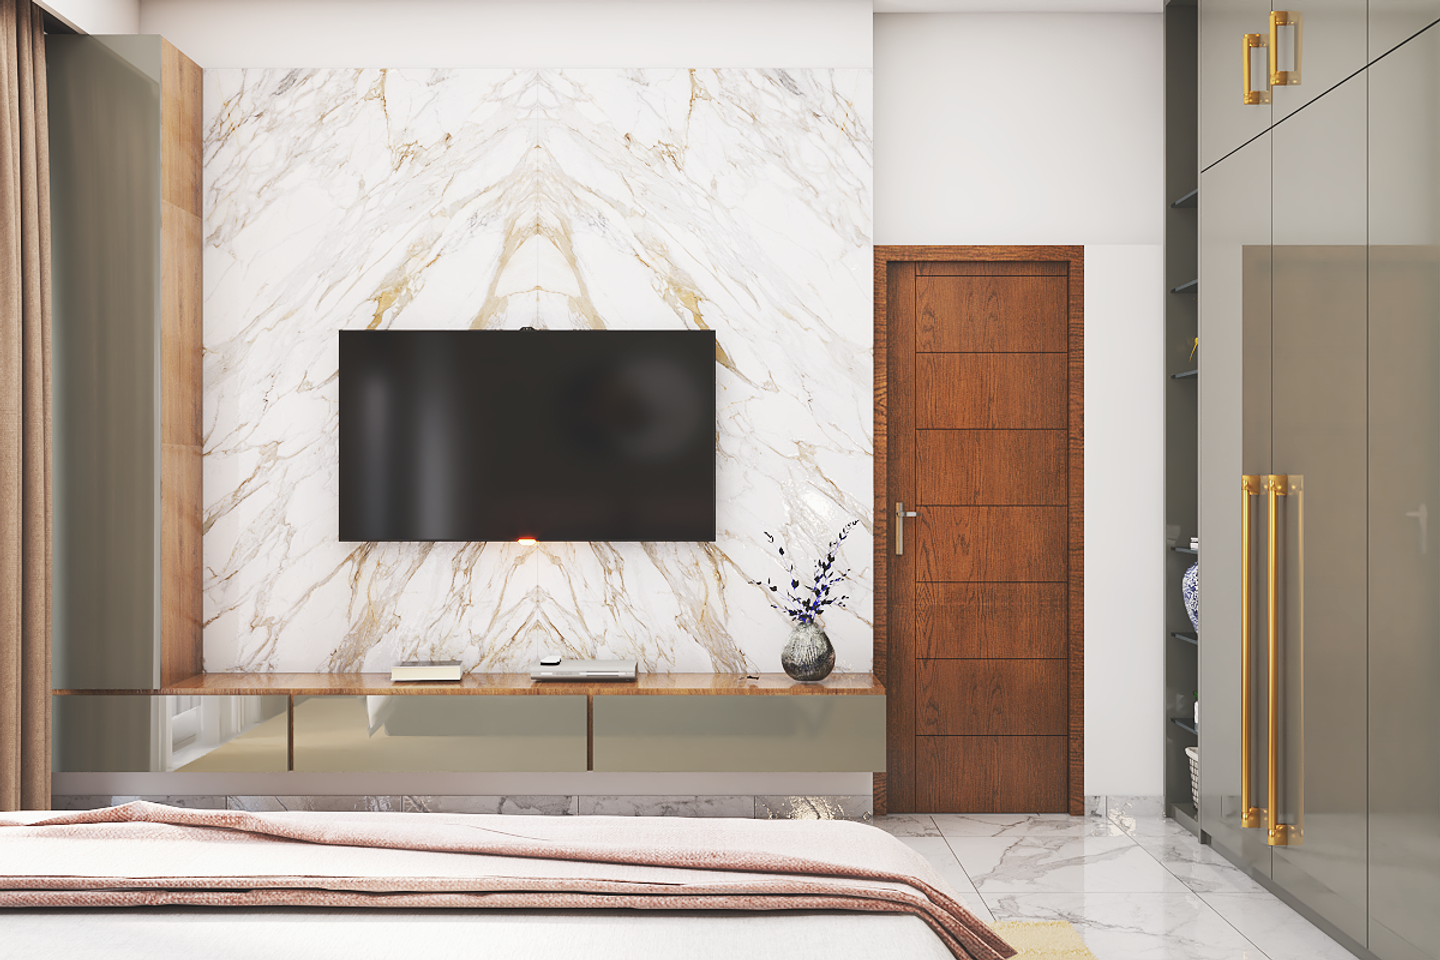 TV Unit Design With Marble Panel - Livspace